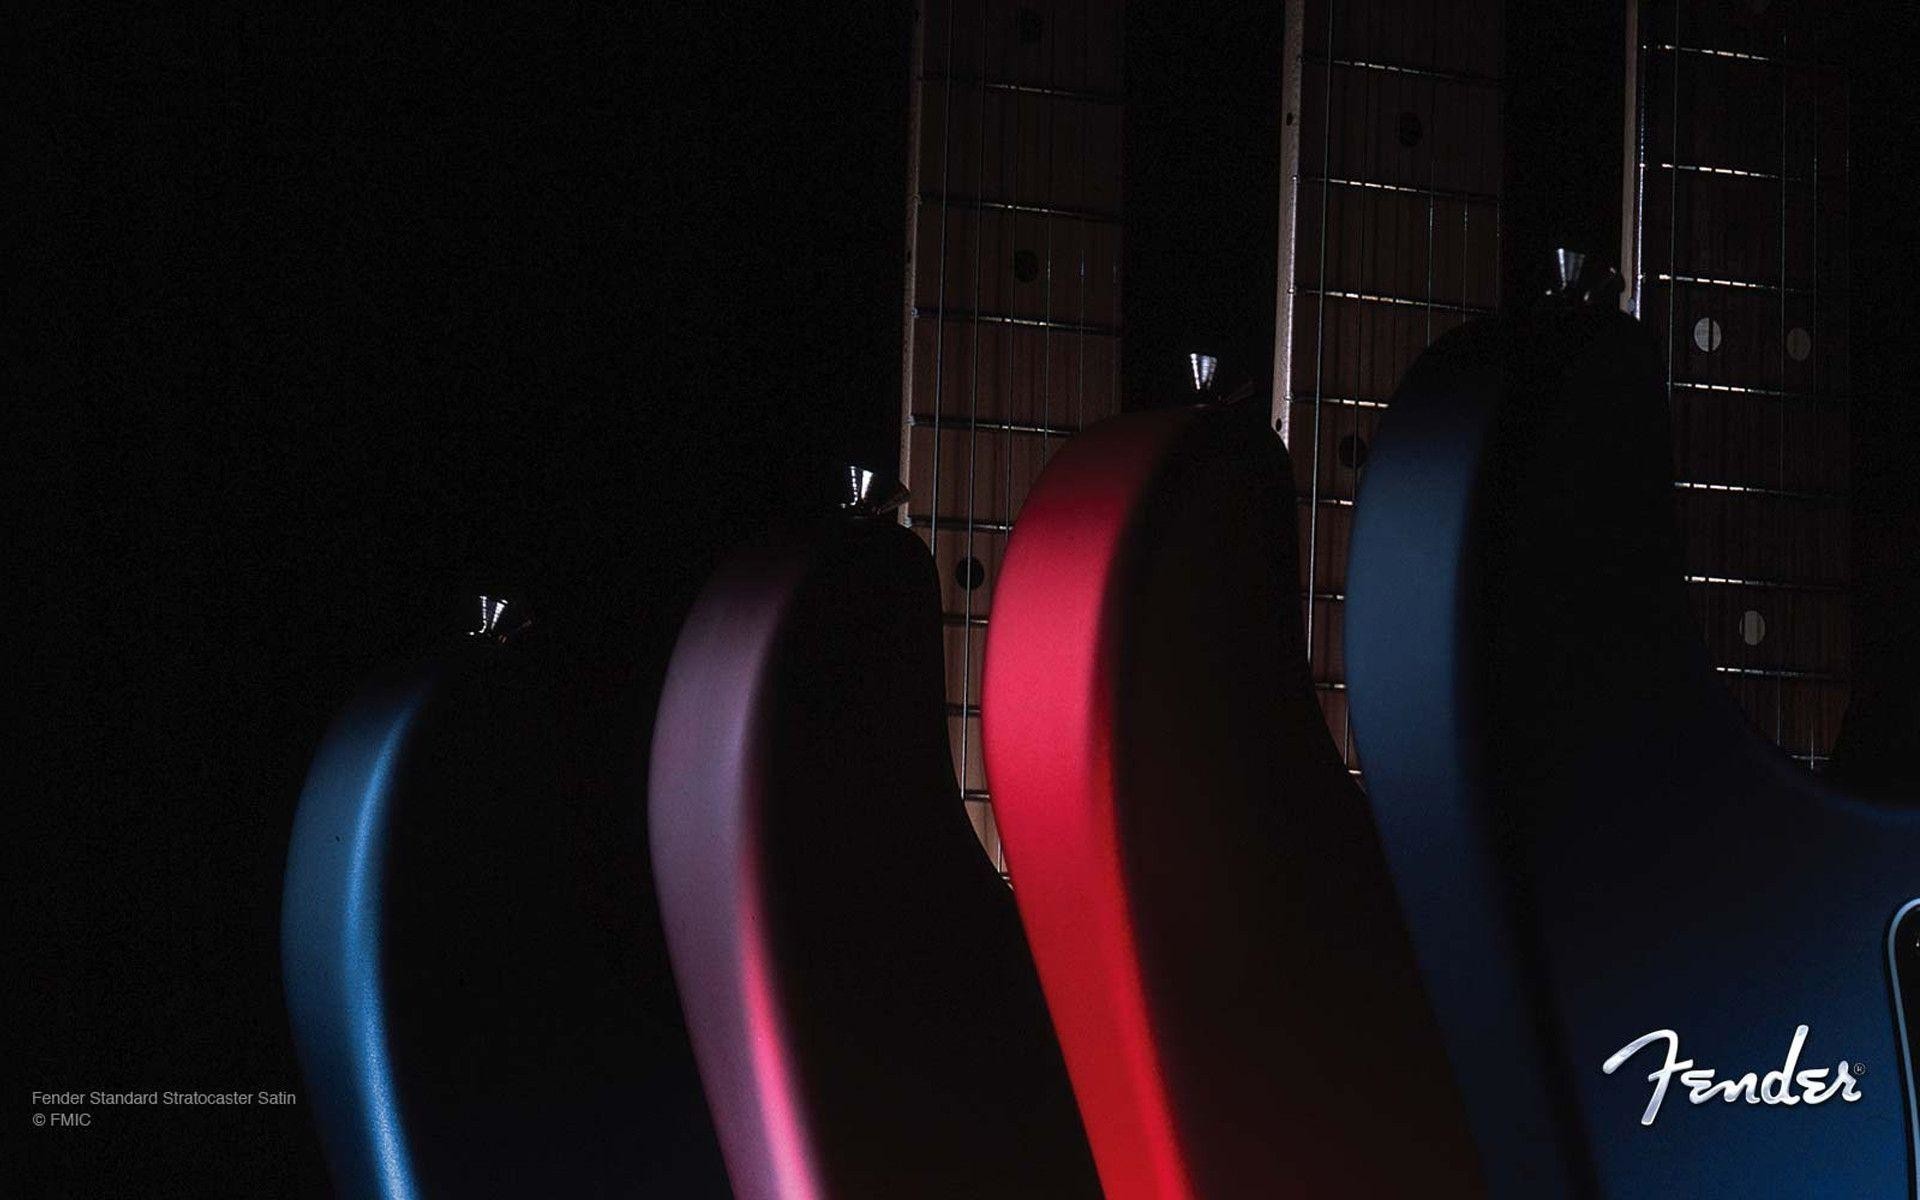 1920x1200 Fender Guitar Wallpapers - Full HD wallpaper search